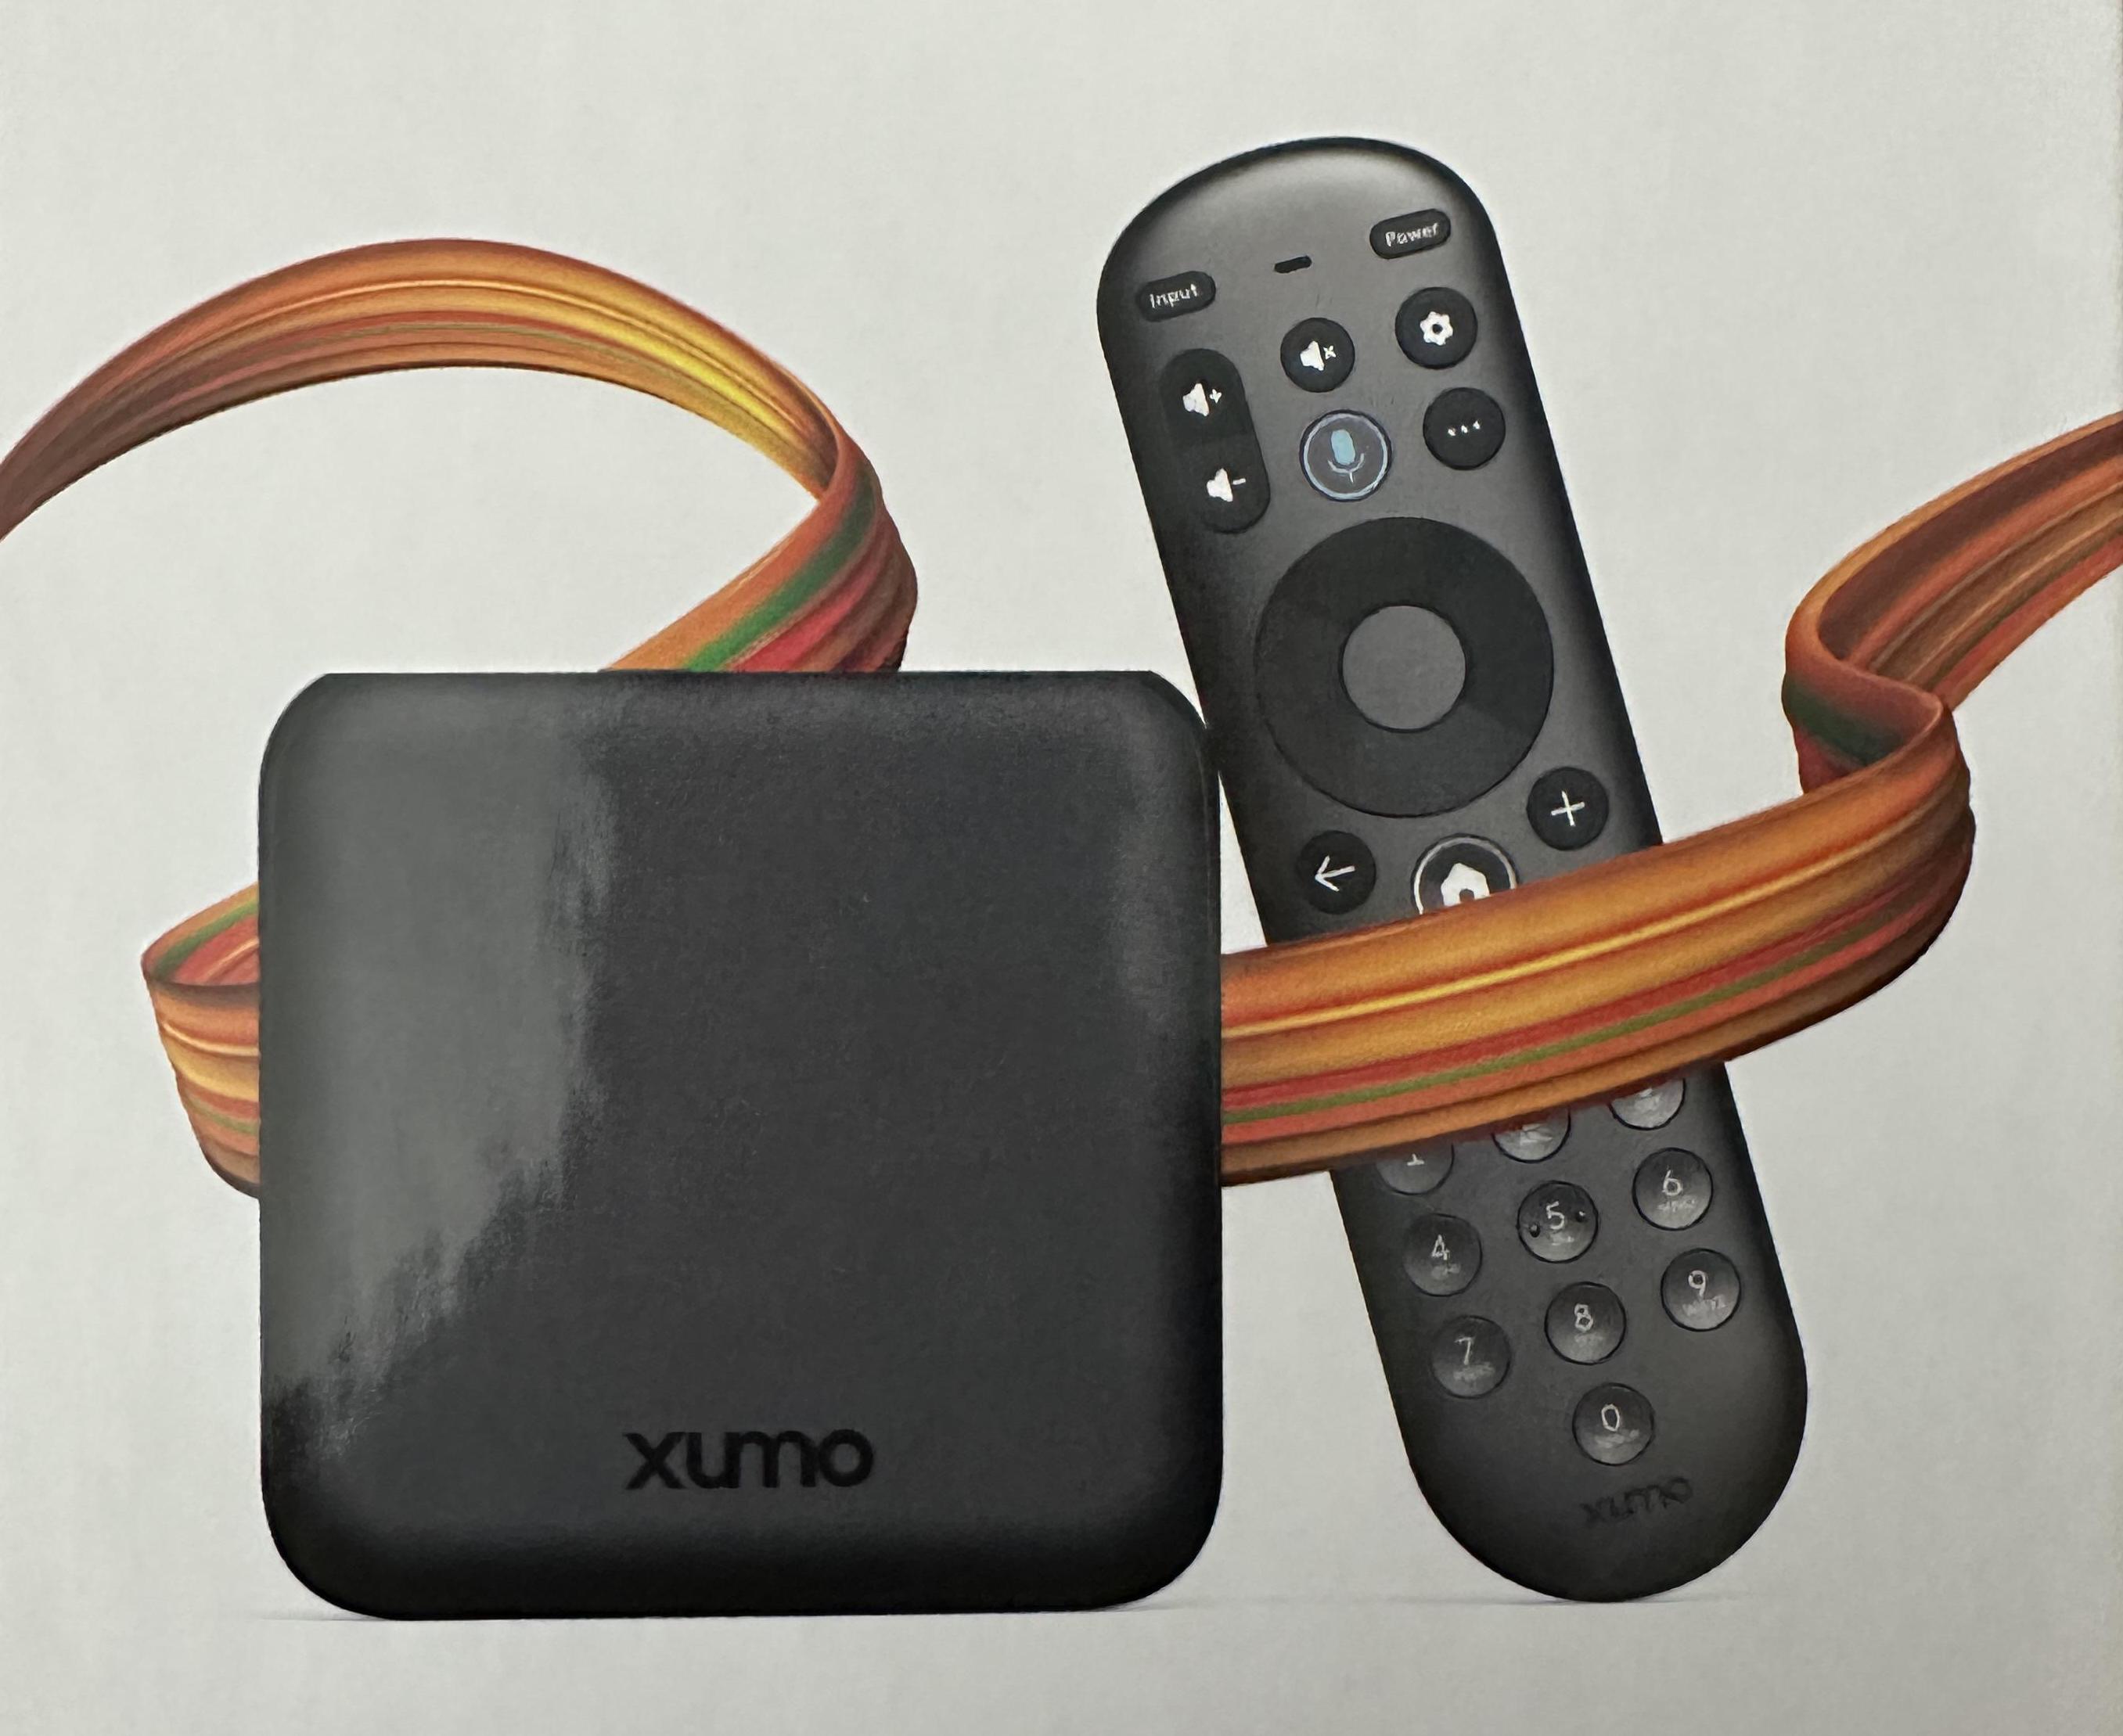 New ways to Stream TV with Xumo – Spectrum Resources